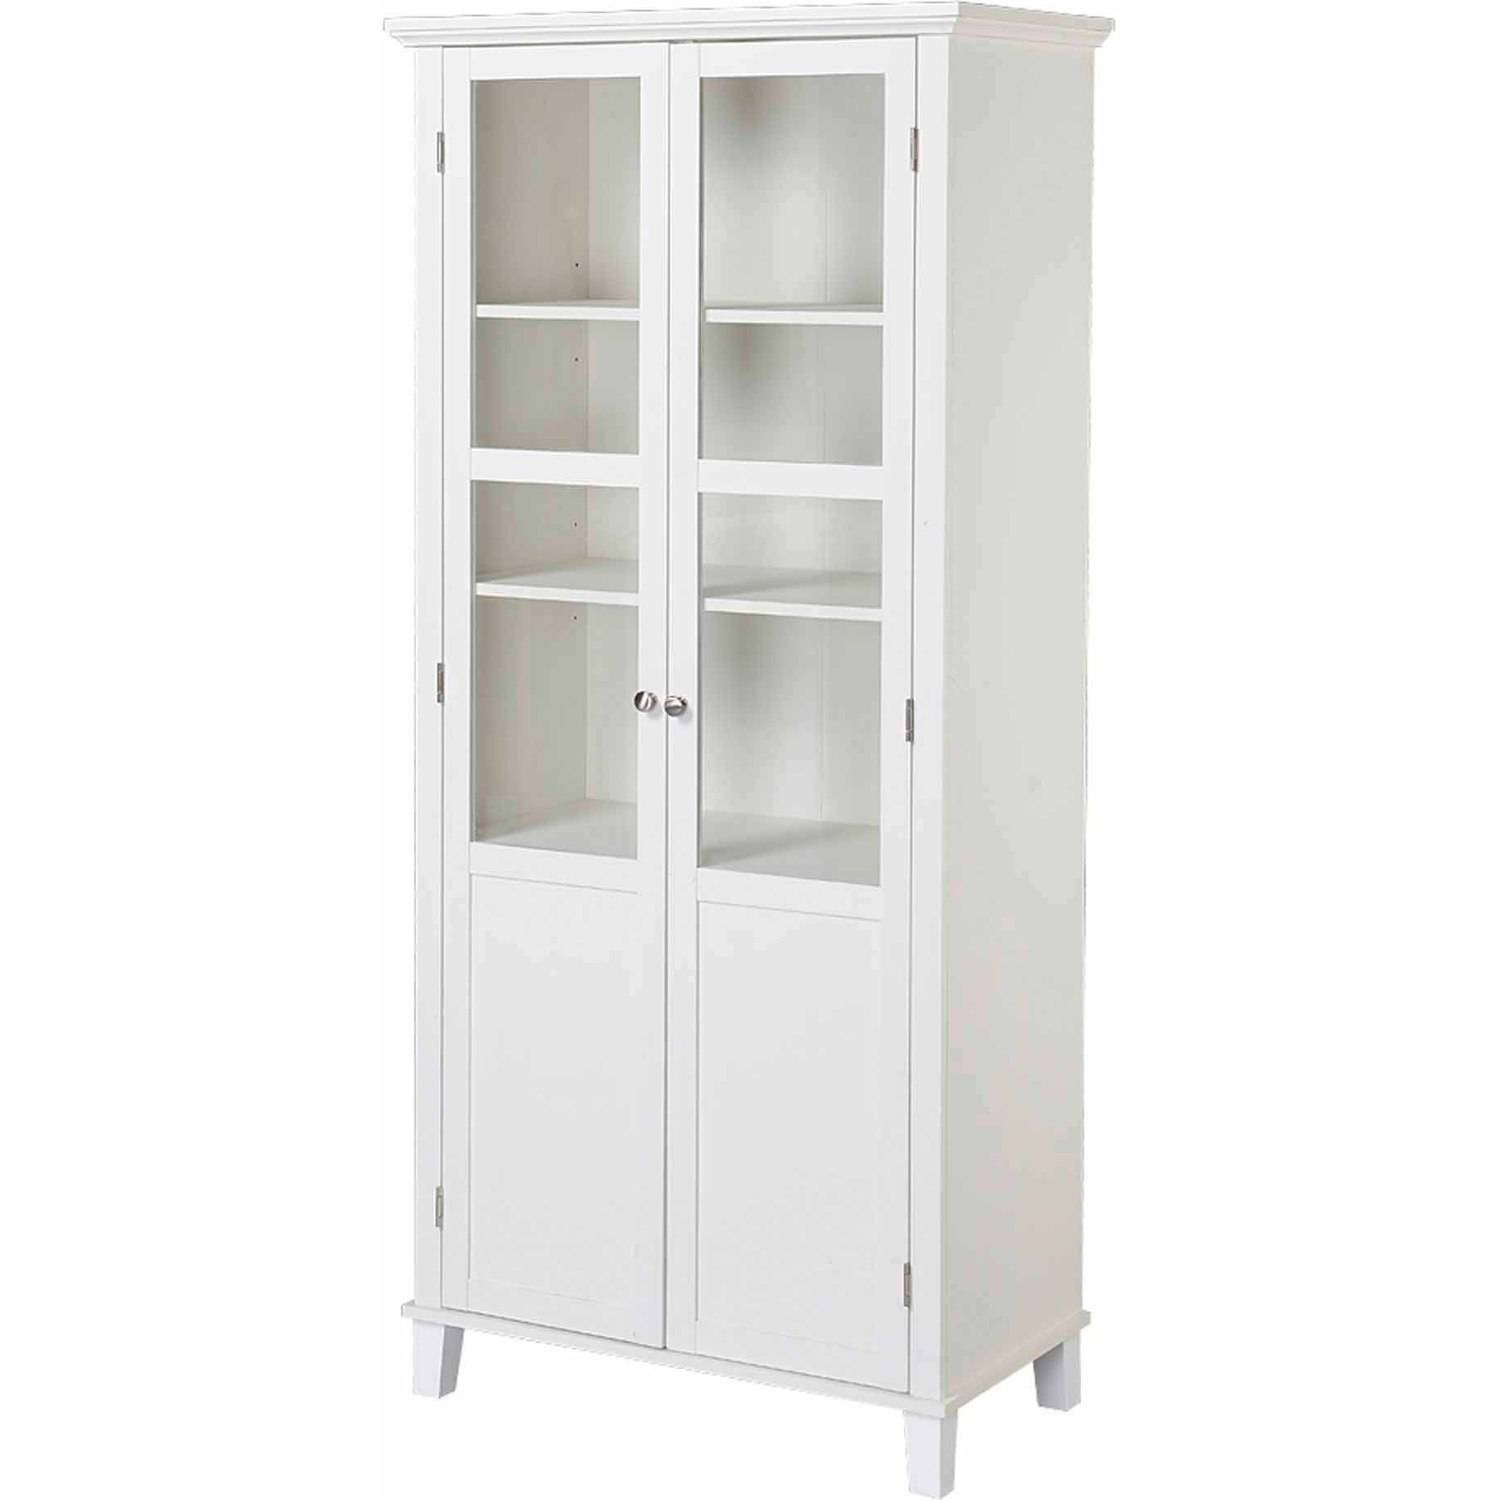 Best ideas about White Storage Cabinet With Doors
. Save or Pin White Cabinet Glass Door handballtunisie Now.